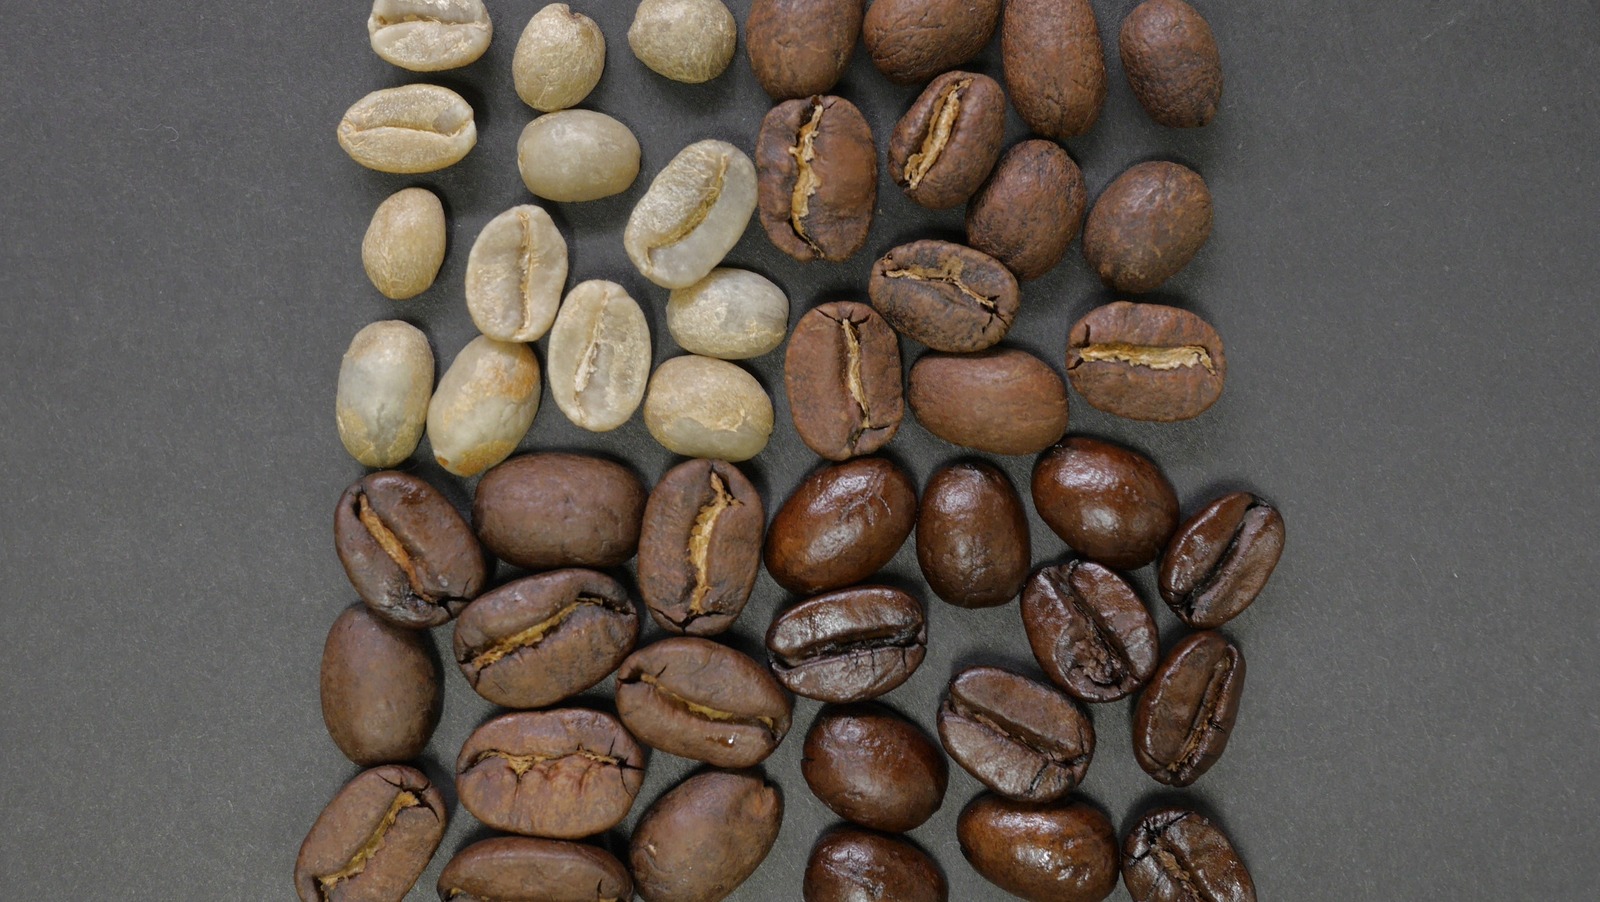 https://www.tastingtable.com/img/gallery/16-types-of-coffee-roasts-explained/l-intro-1659907273.jpg